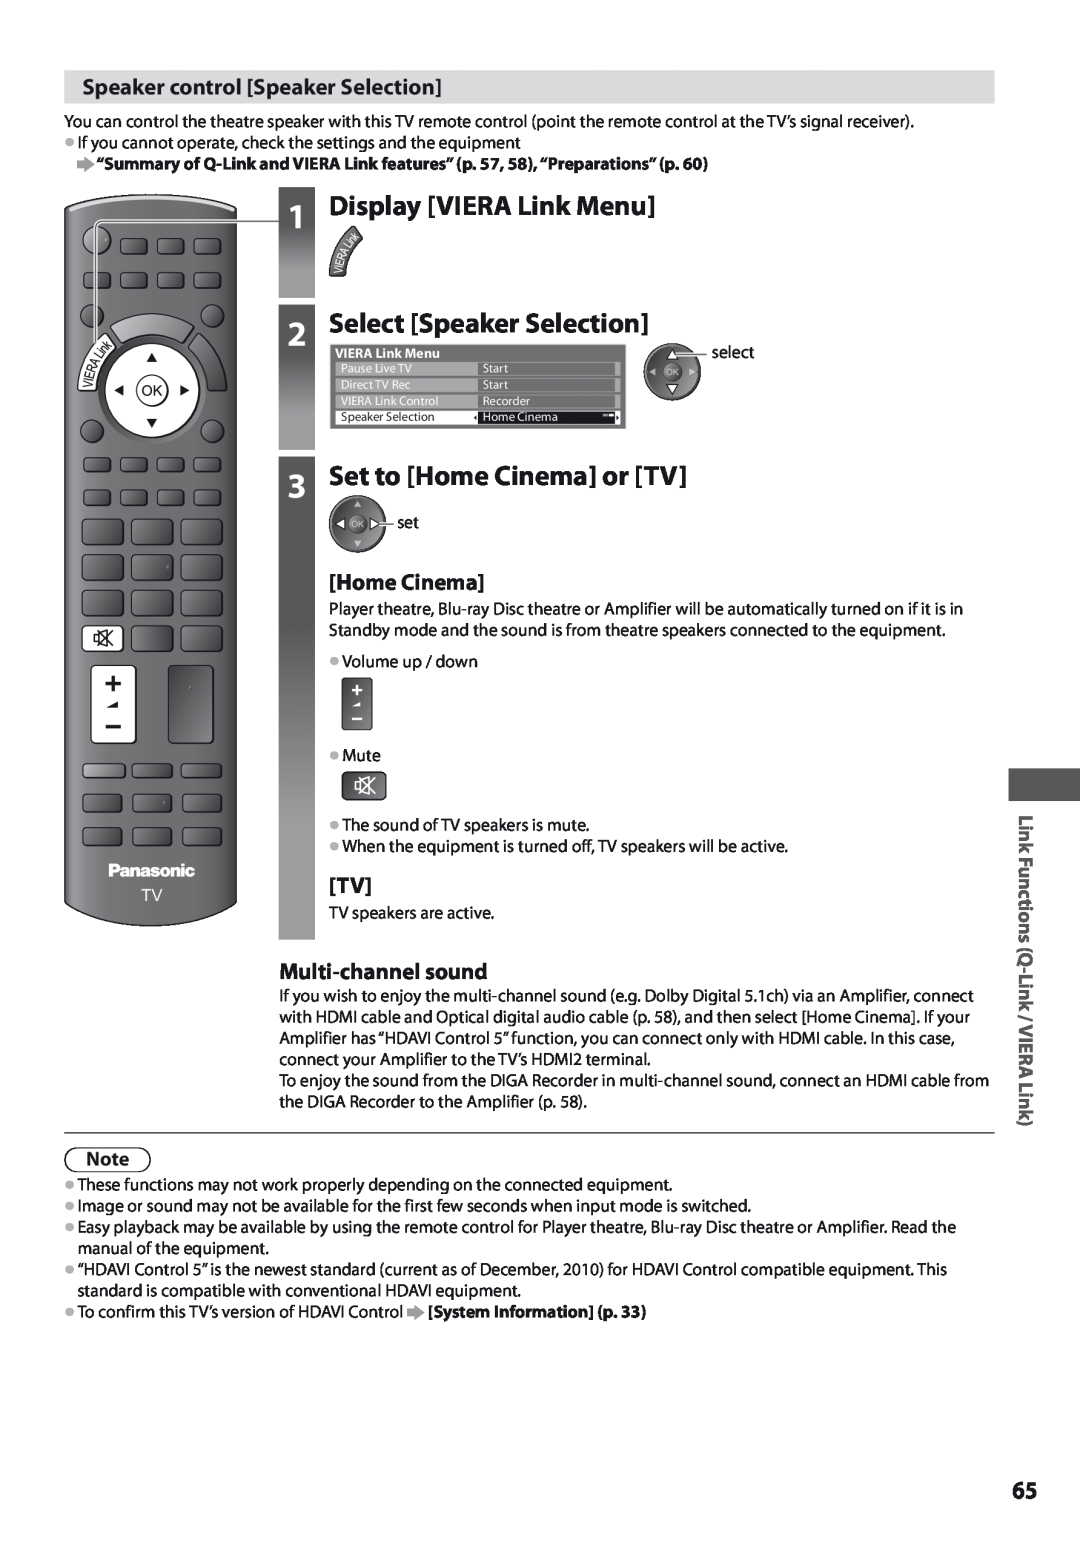 Panasonic TX-L37U3E, TX-L42U3E Select Speaker Selection, Set to Home Cinema or TV, Speaker control Speaker Selection, Tvtv 